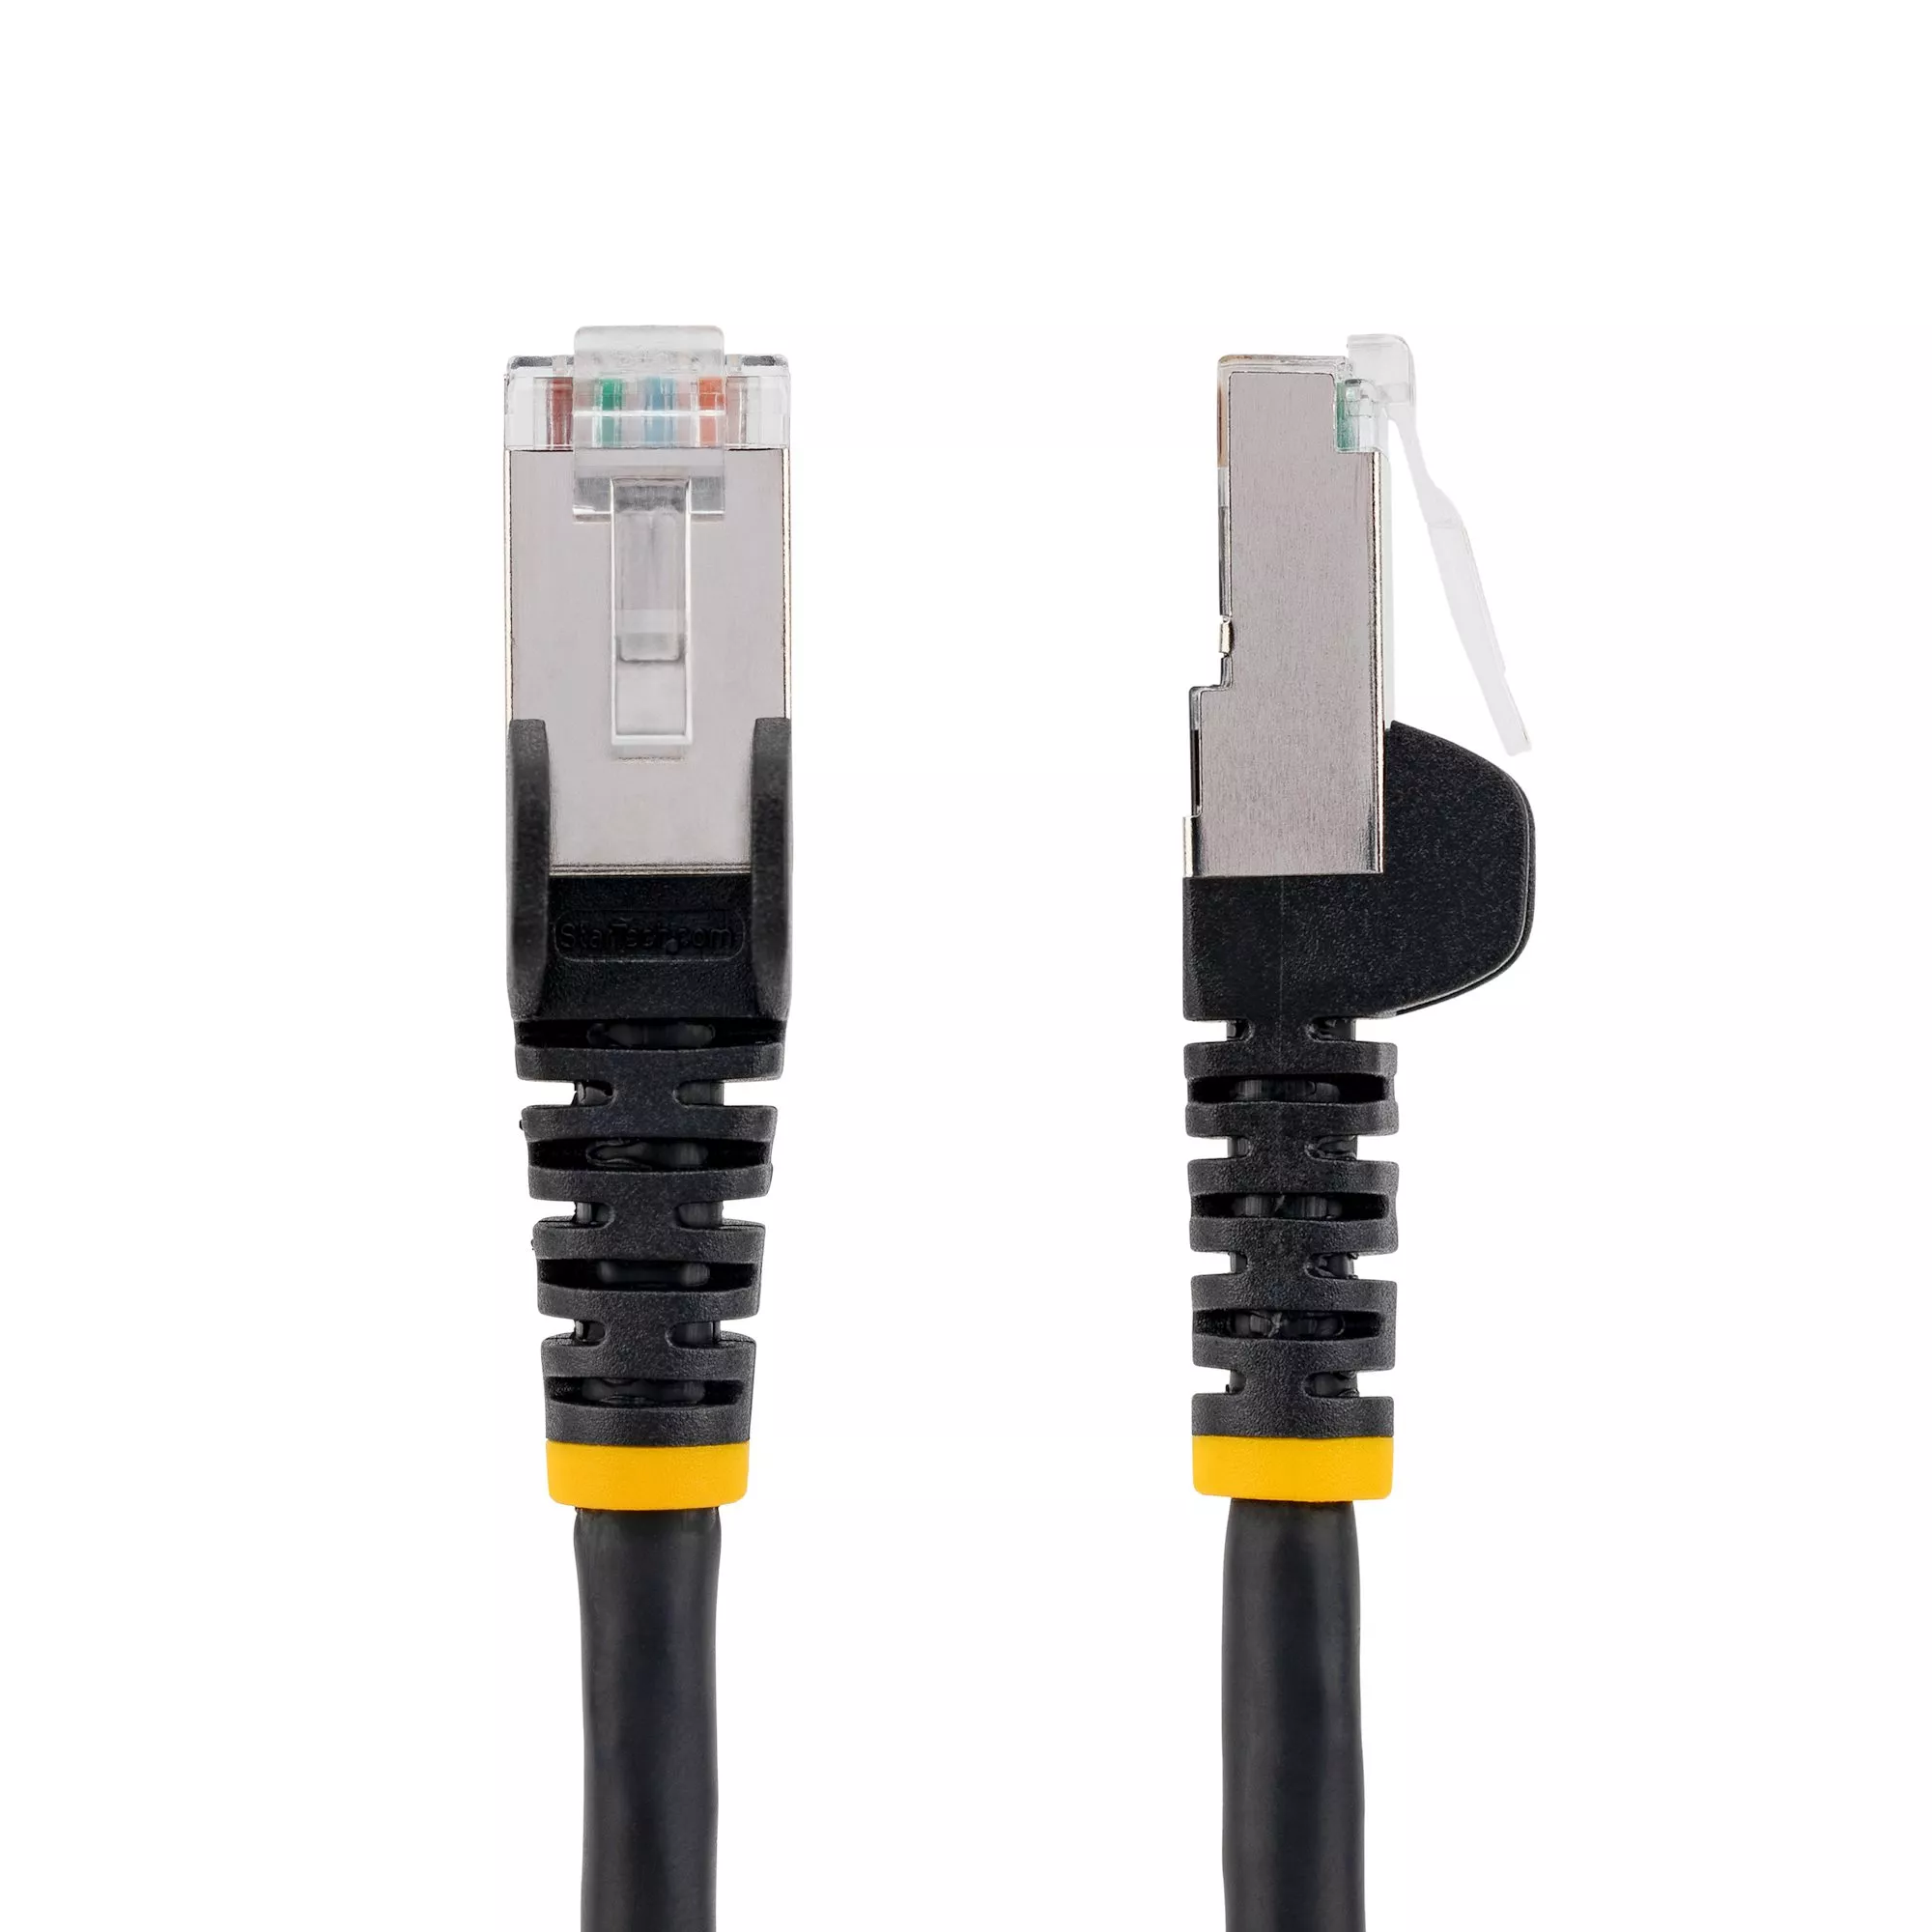 Vente StarTech.com Câble Ethernet CAT6a 1m - Low Smoke StarTech.com au meilleur prix - visuel 2